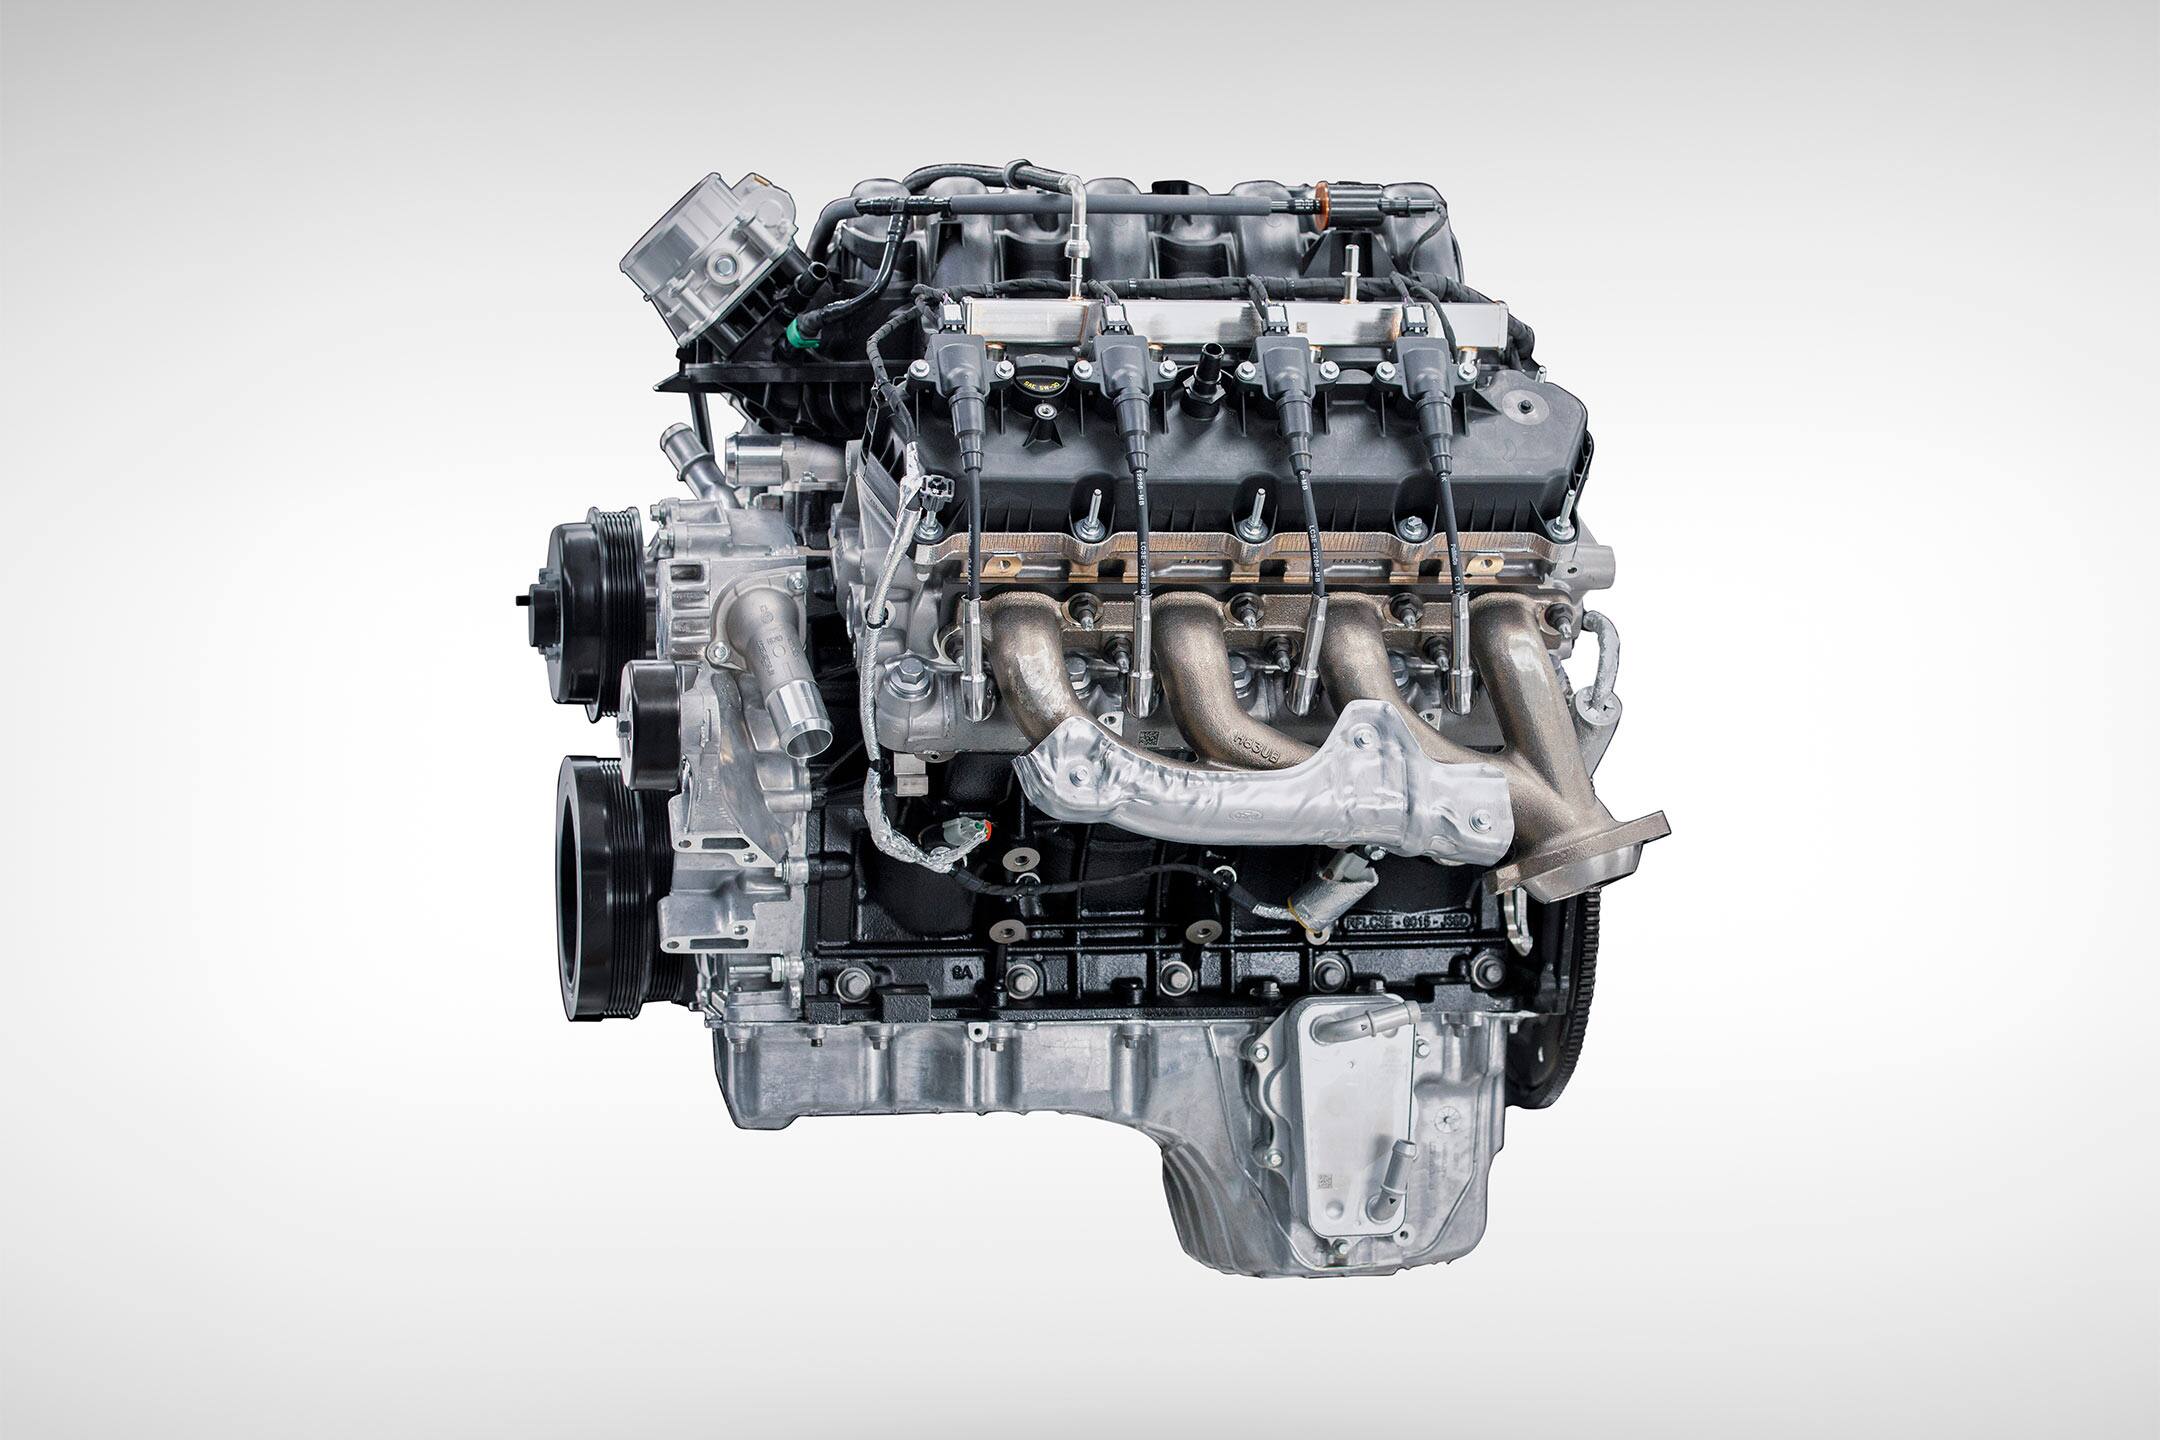 Image of the 6.8 liter PFI gas V8 engine